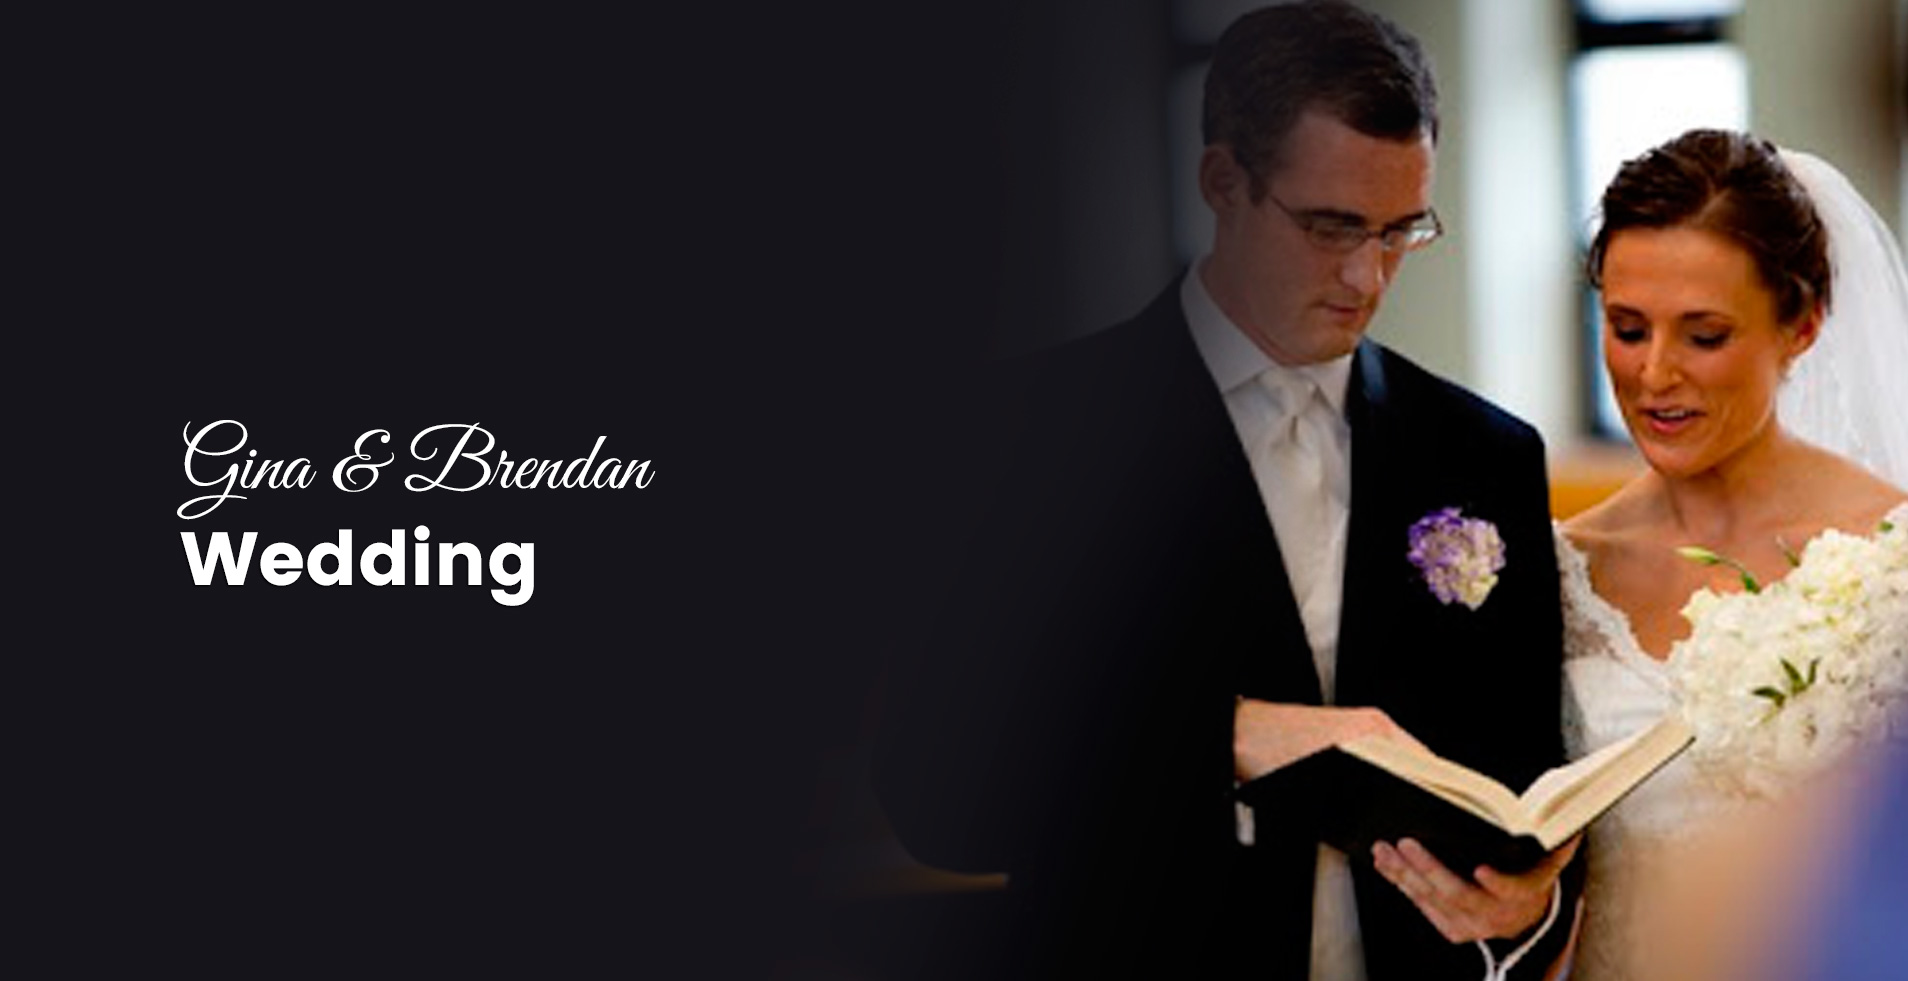 Gina & Brendan :: Wedding